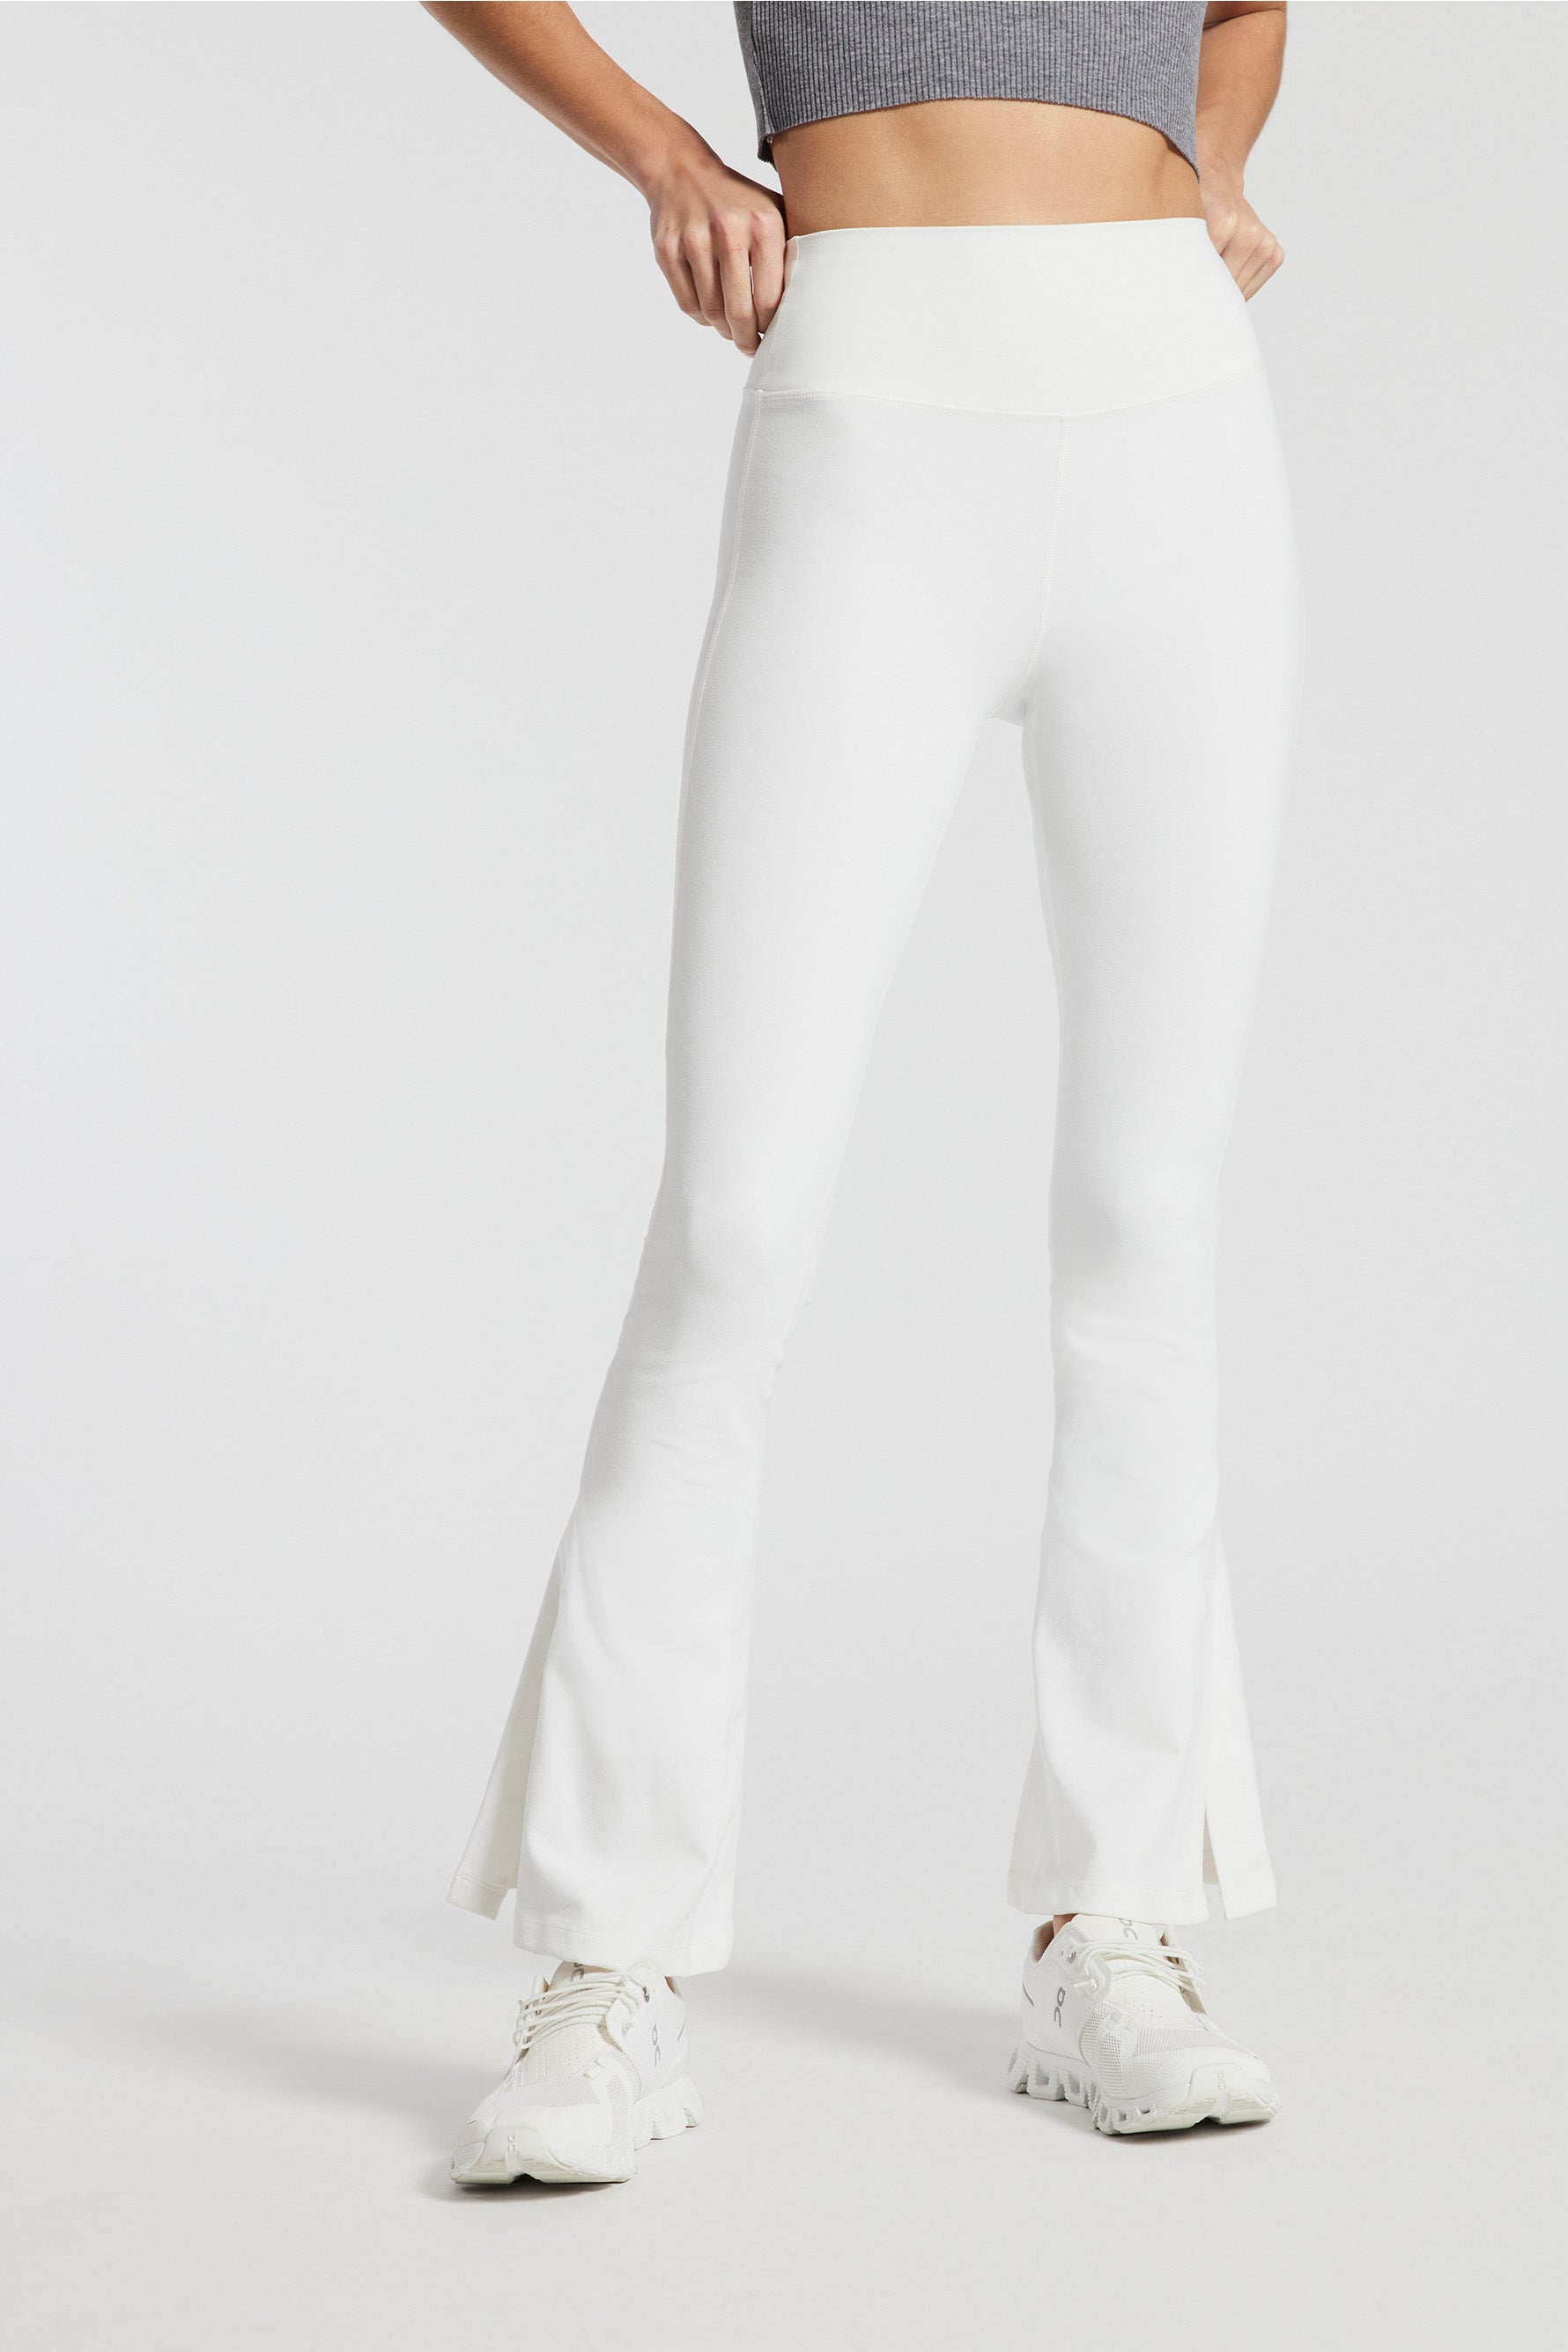 Splits59 Raquel Supplex High-waisted Flare Pant in White